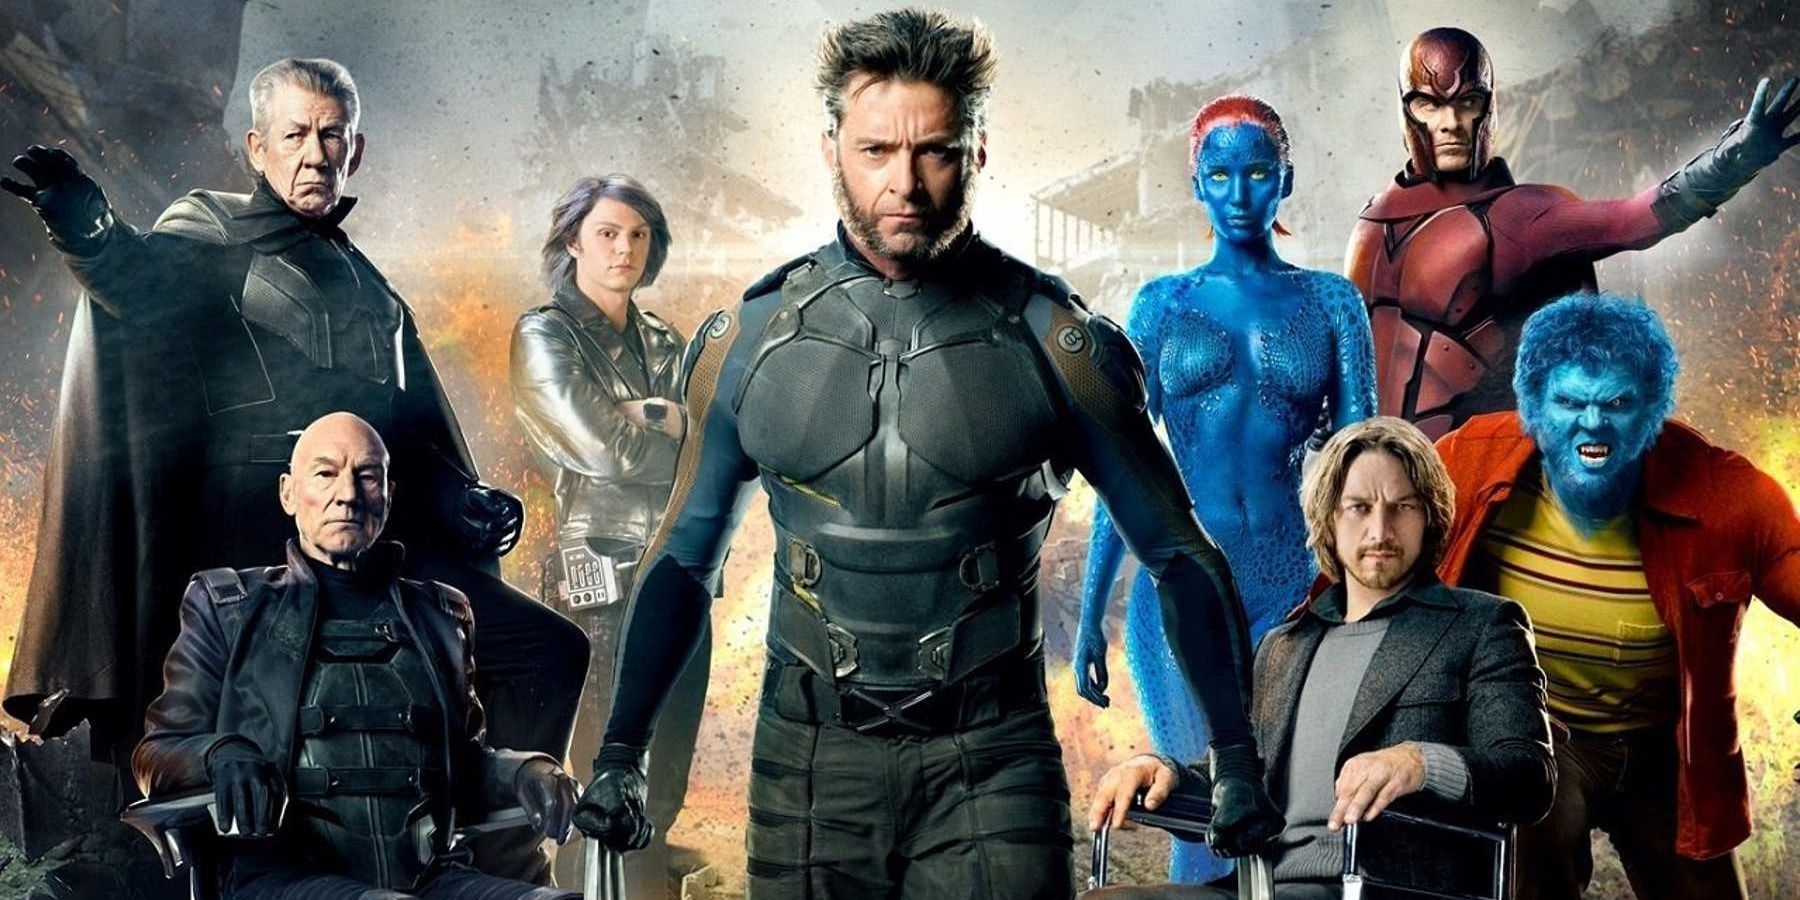 The X-Men assemble in X-Men: Days of Future Past.